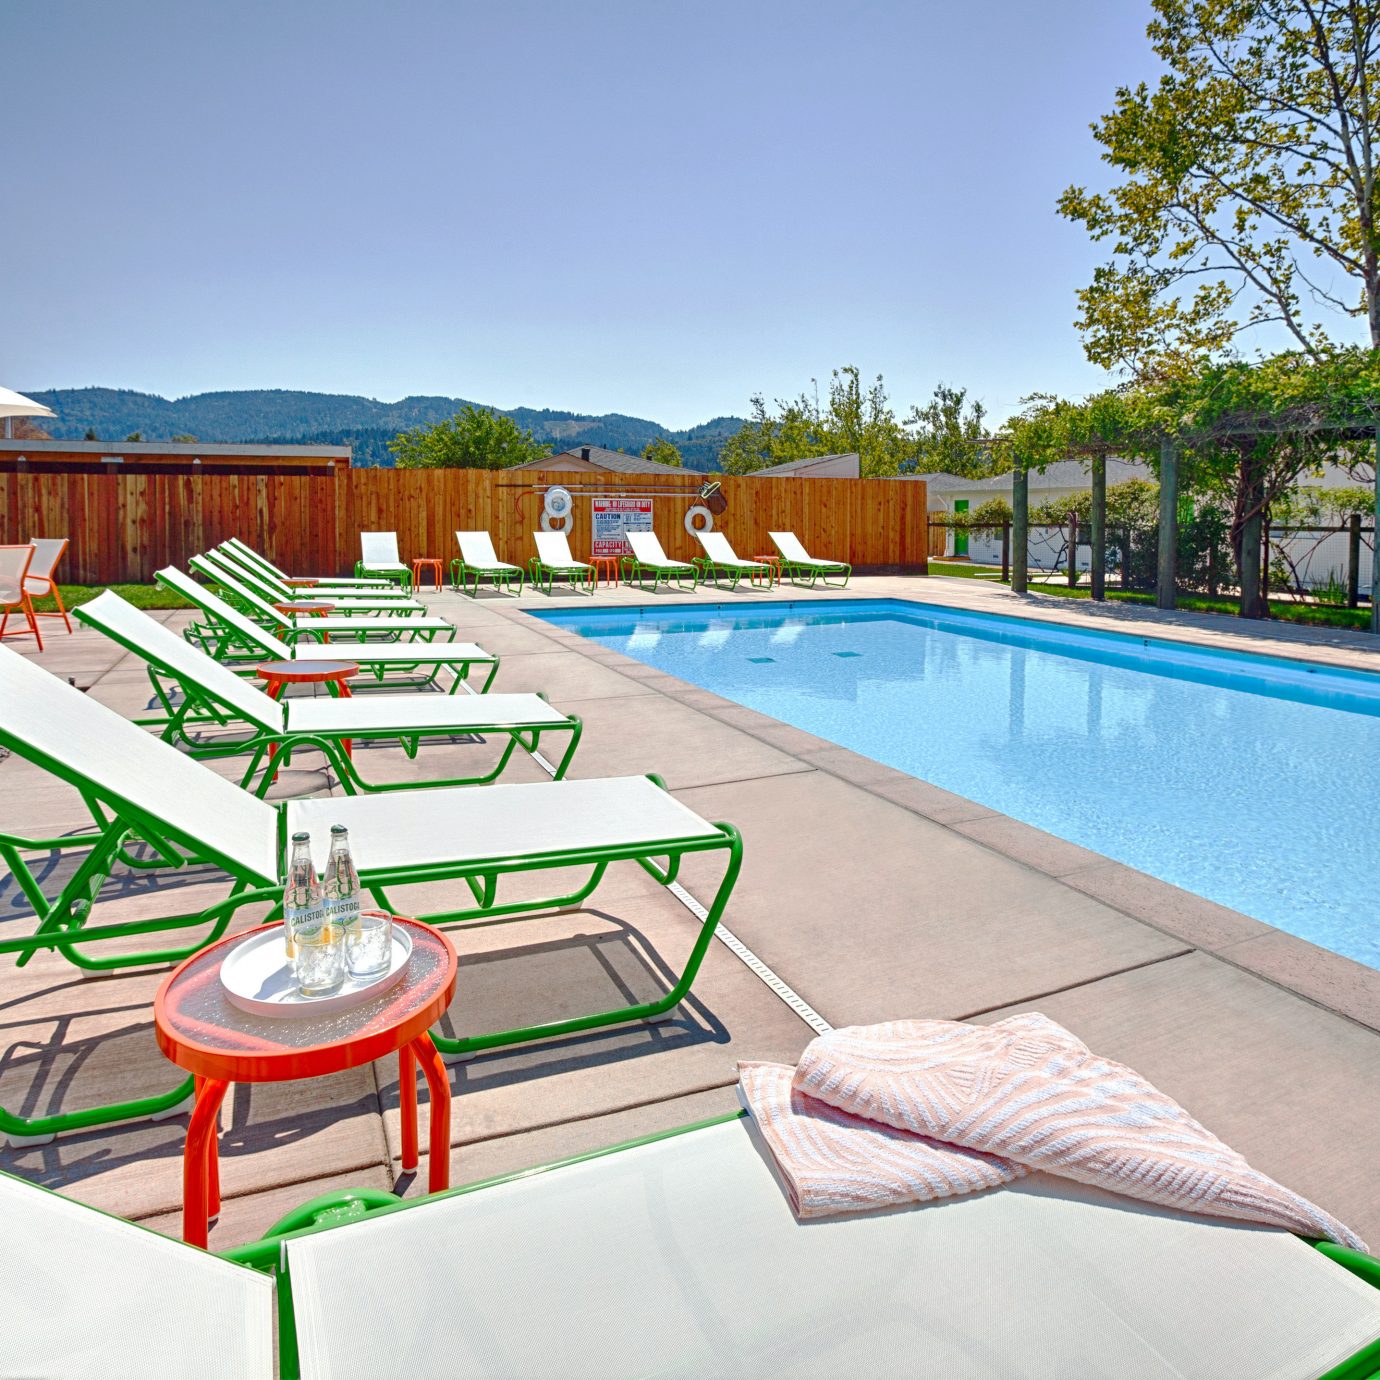 Deck Lounge Modern Patio Pool sky ground leisure swimming pool property Resort Water park backyard condominium